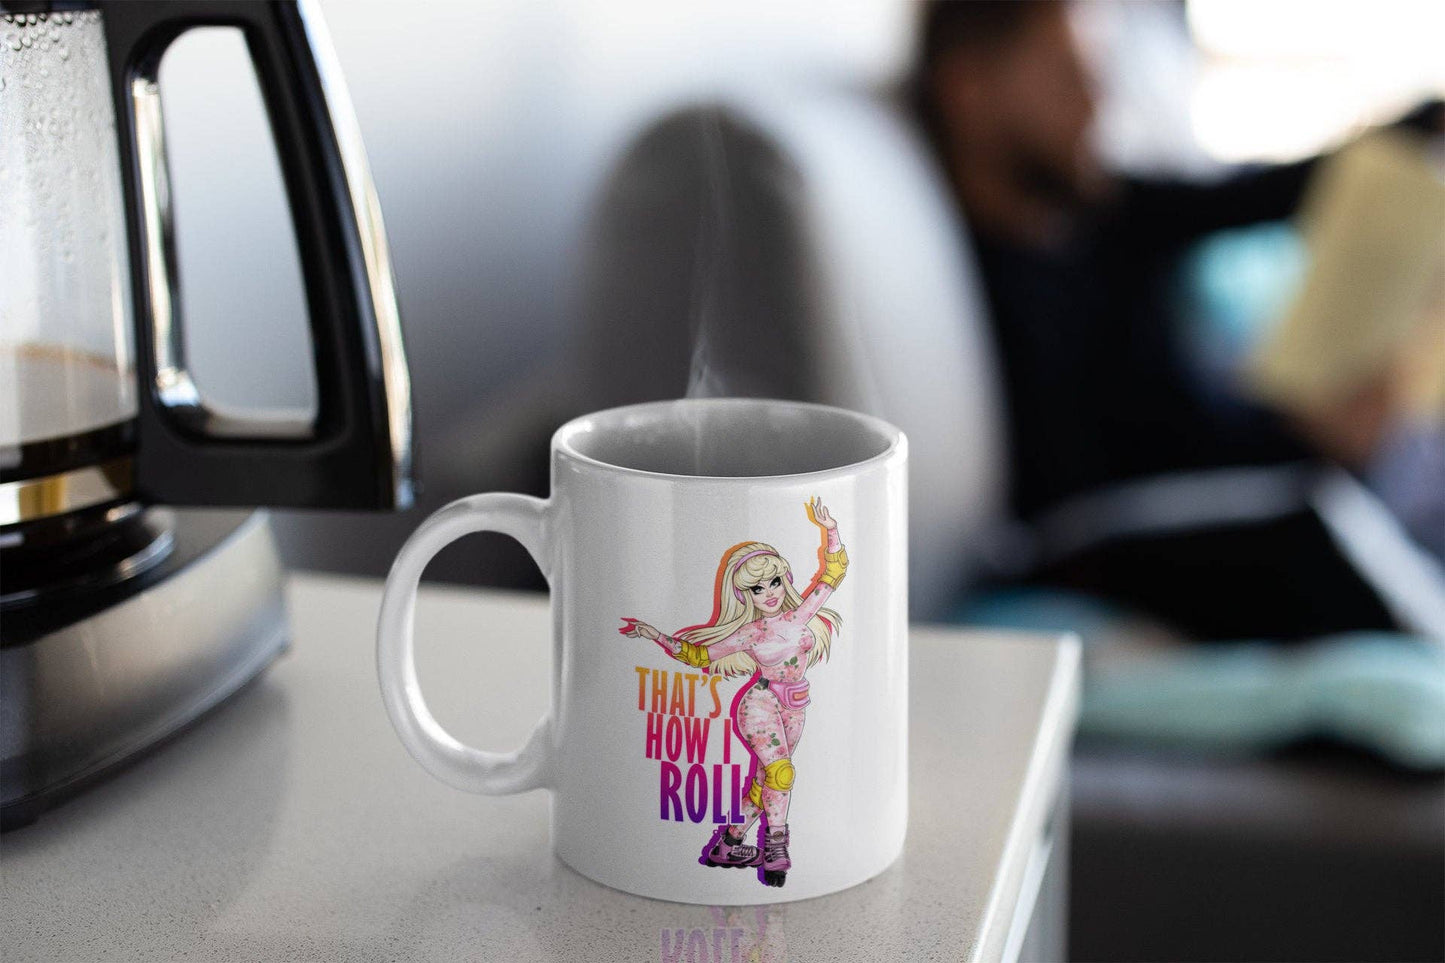 Trixie Mattel That's How I Roll Coffee Mug 11oz